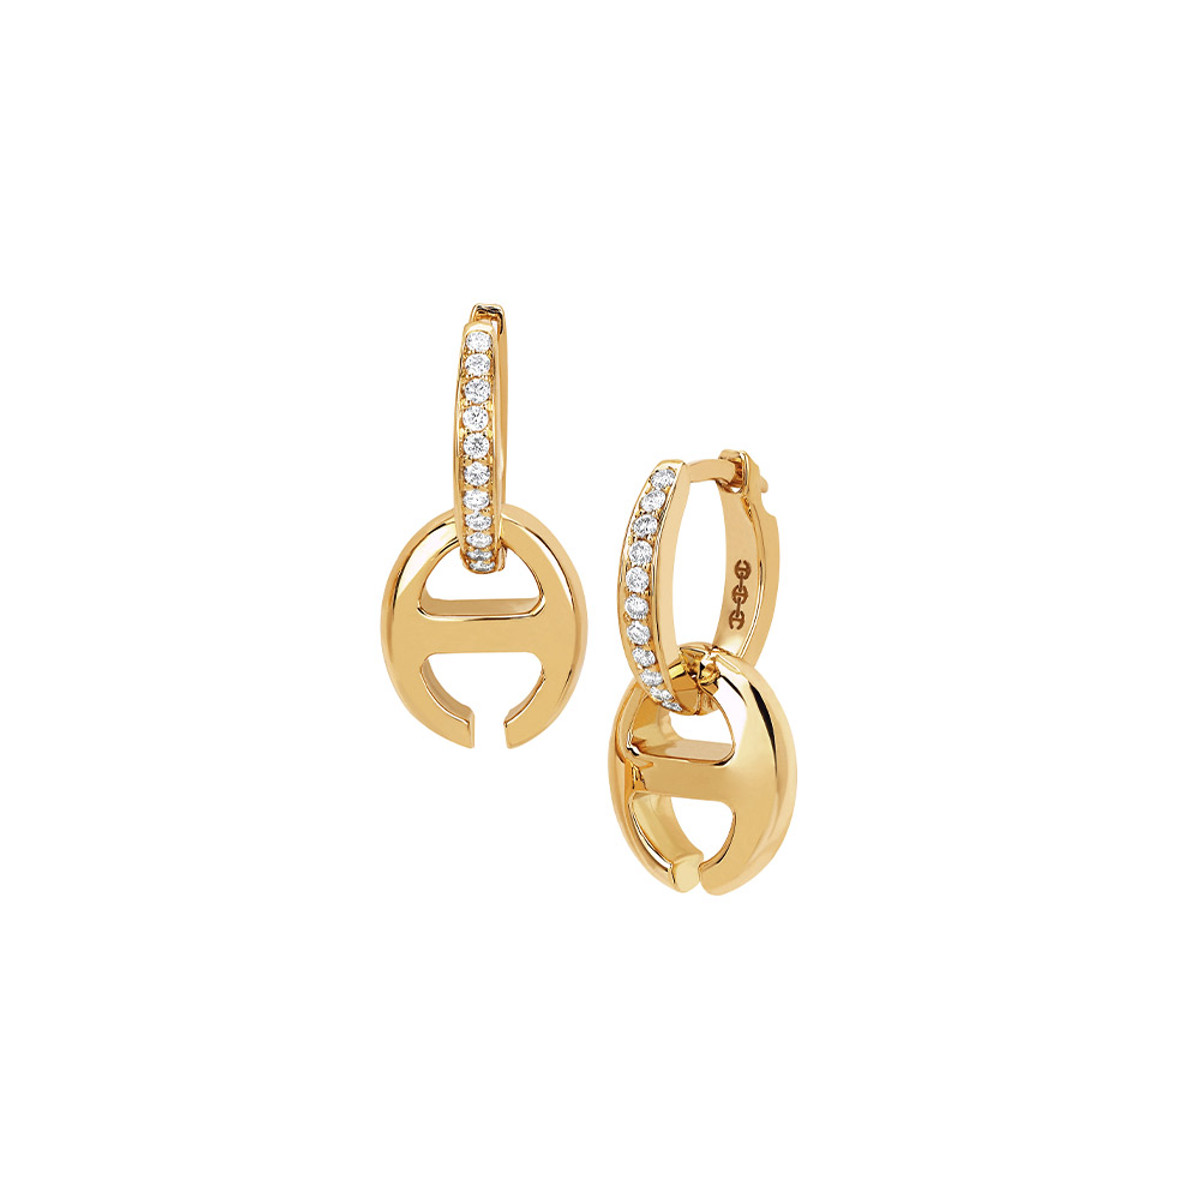 Hoorsenbuhs 18K Yellow Gold Klaasp Diamond Earrings-57471